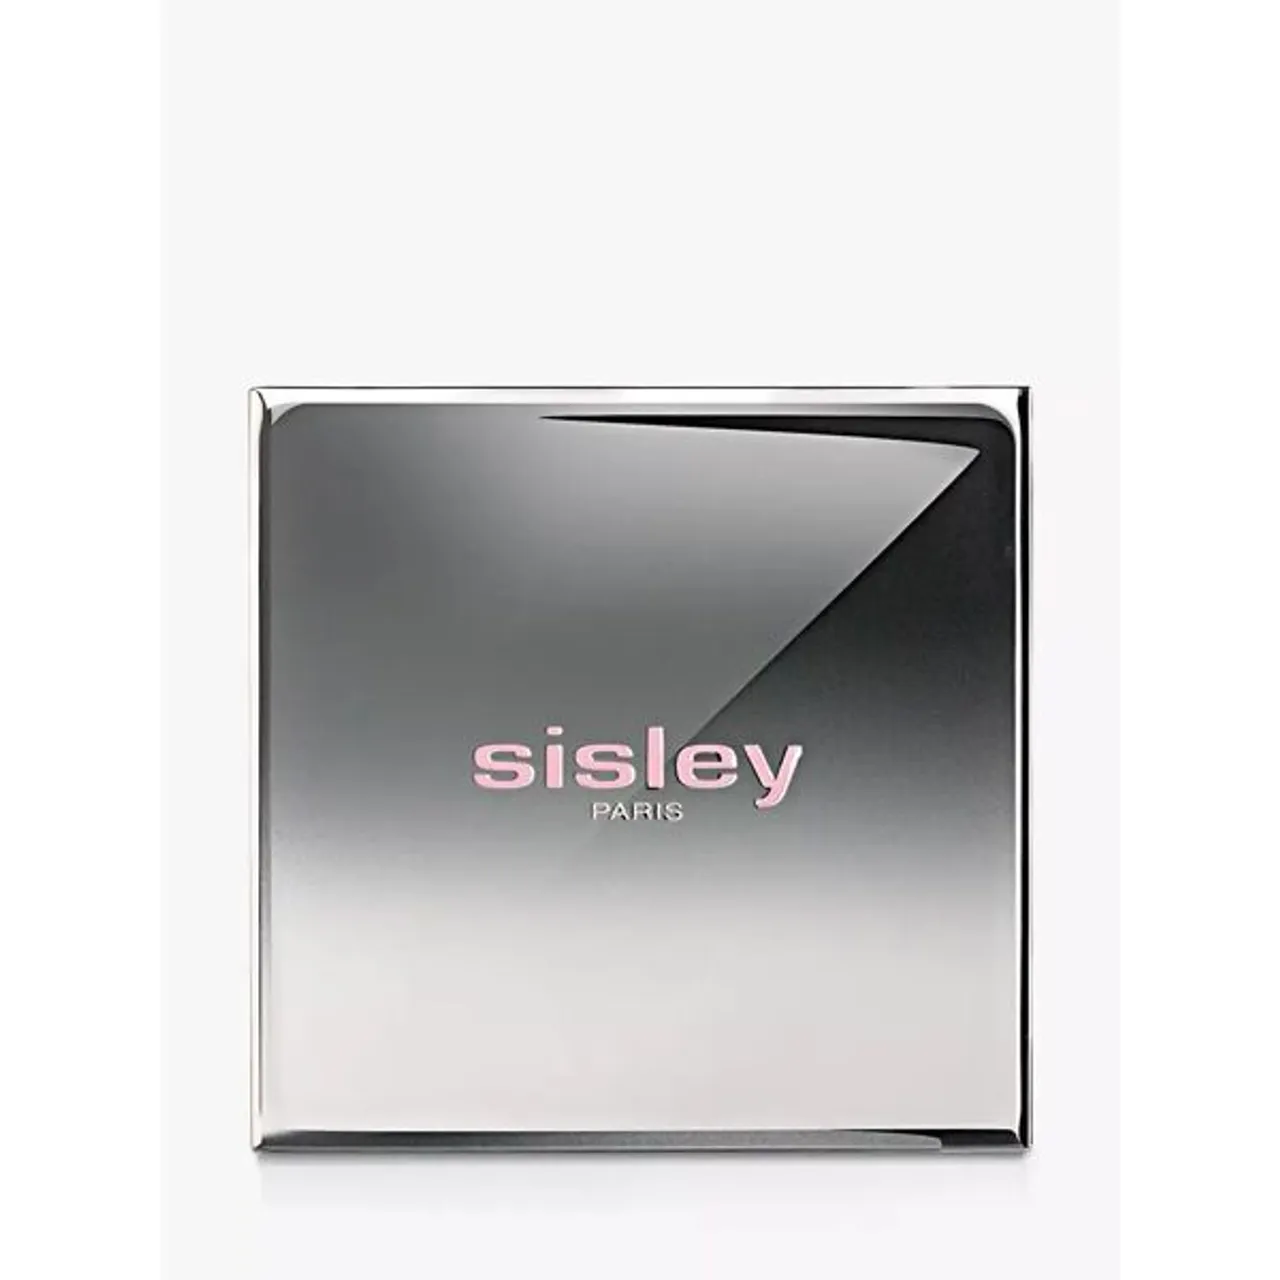 Sisley-Paris Blur Expert Powder, 11g - Neutral - Unisex